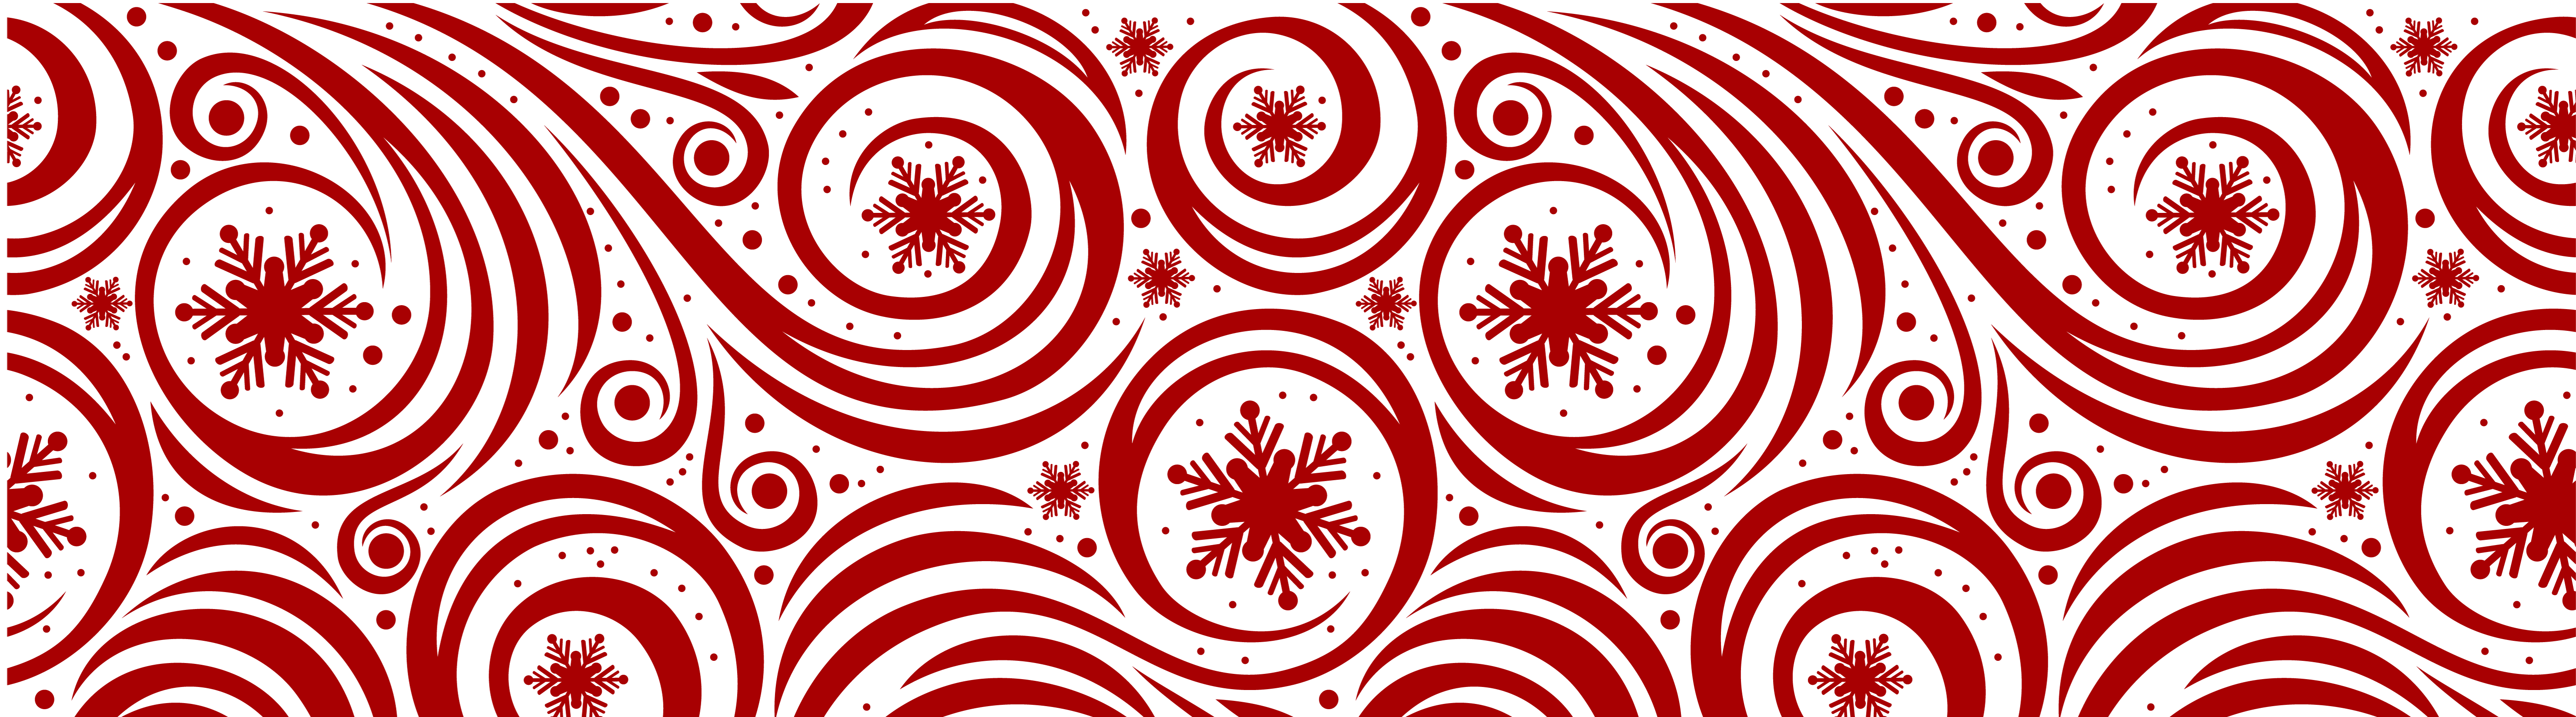 Pattern Christmas HQ Image Free PNG Image